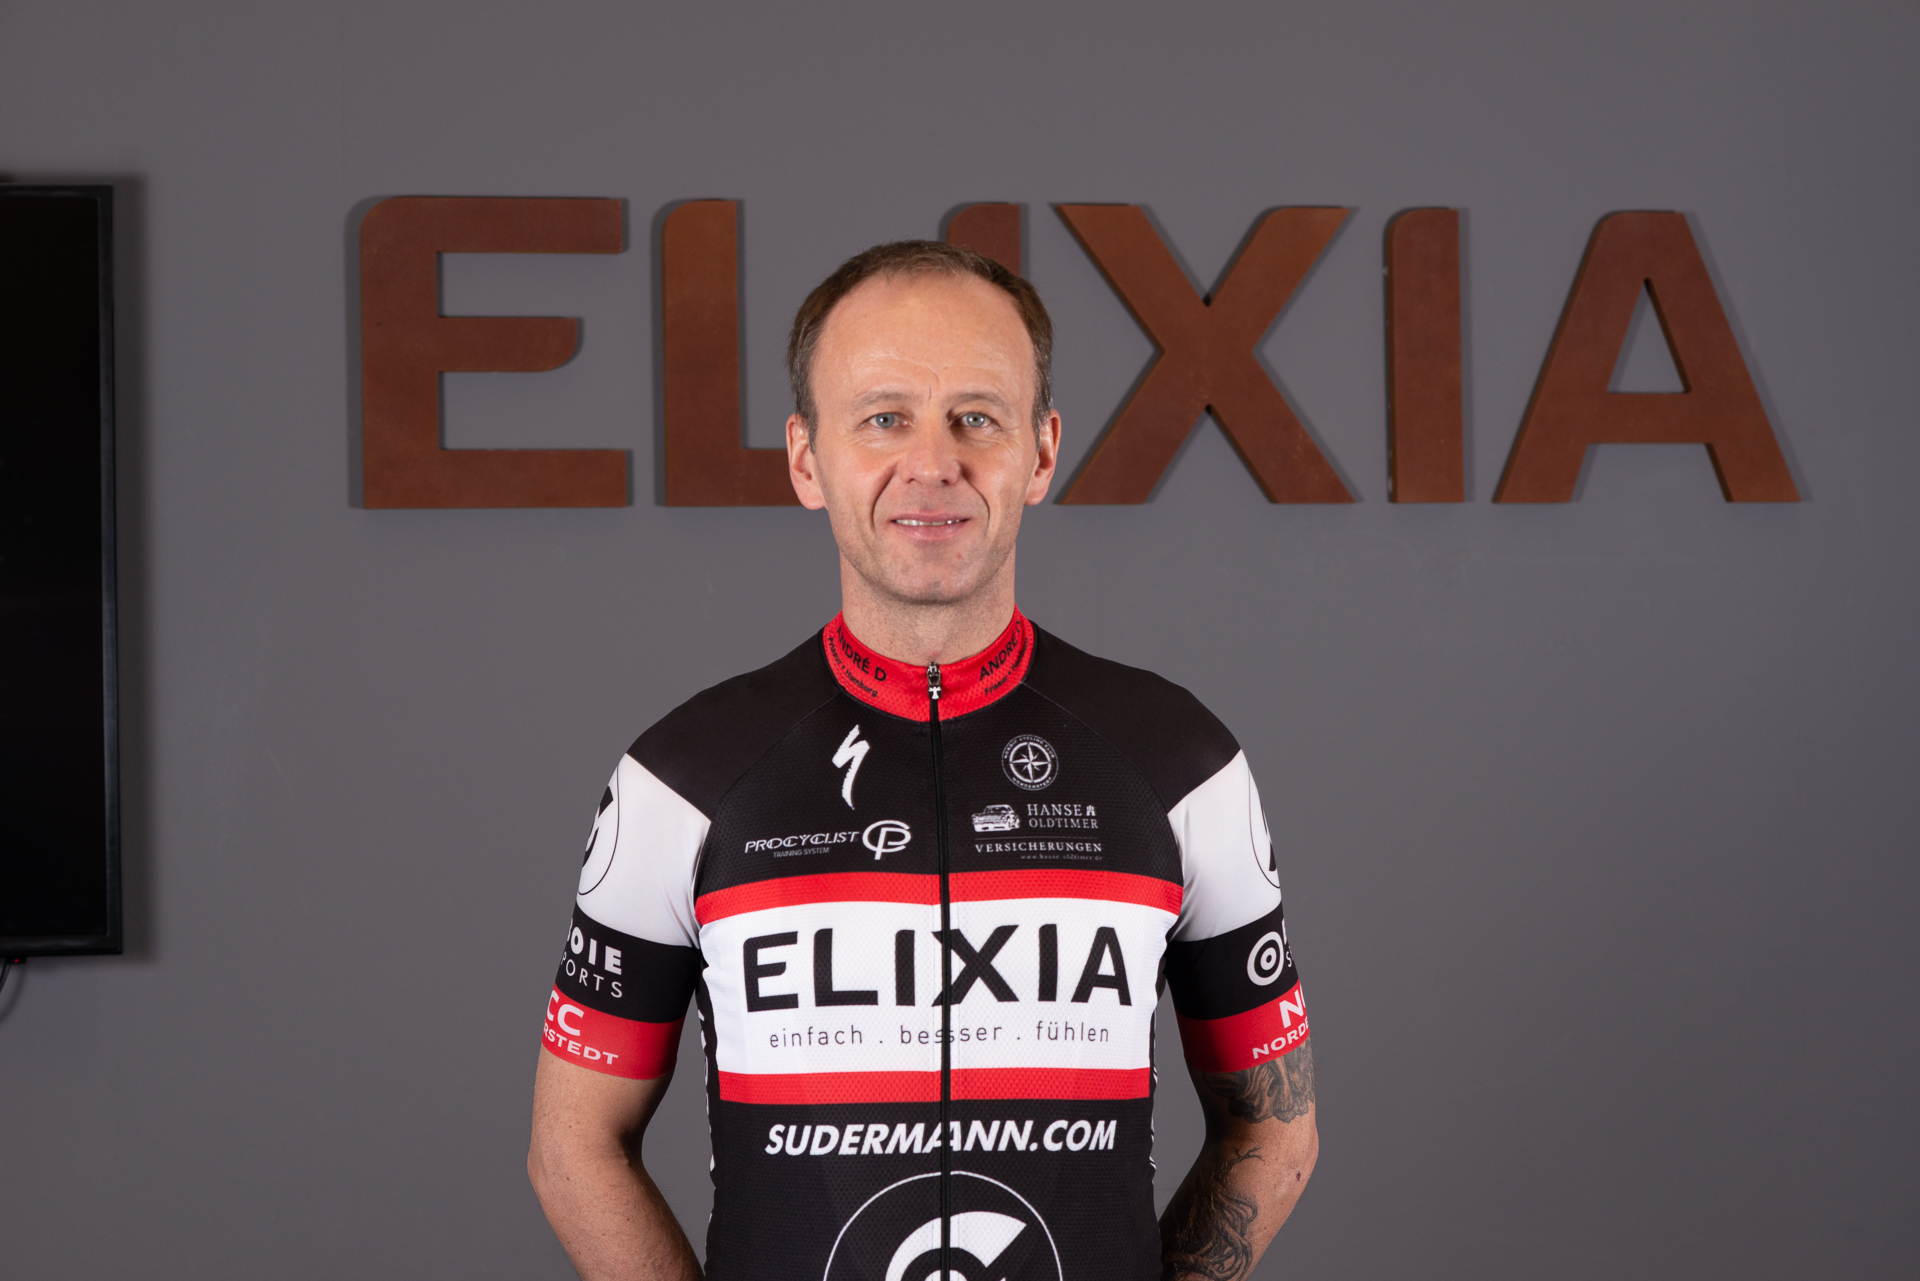 alexander temme Nordic Cycling Club